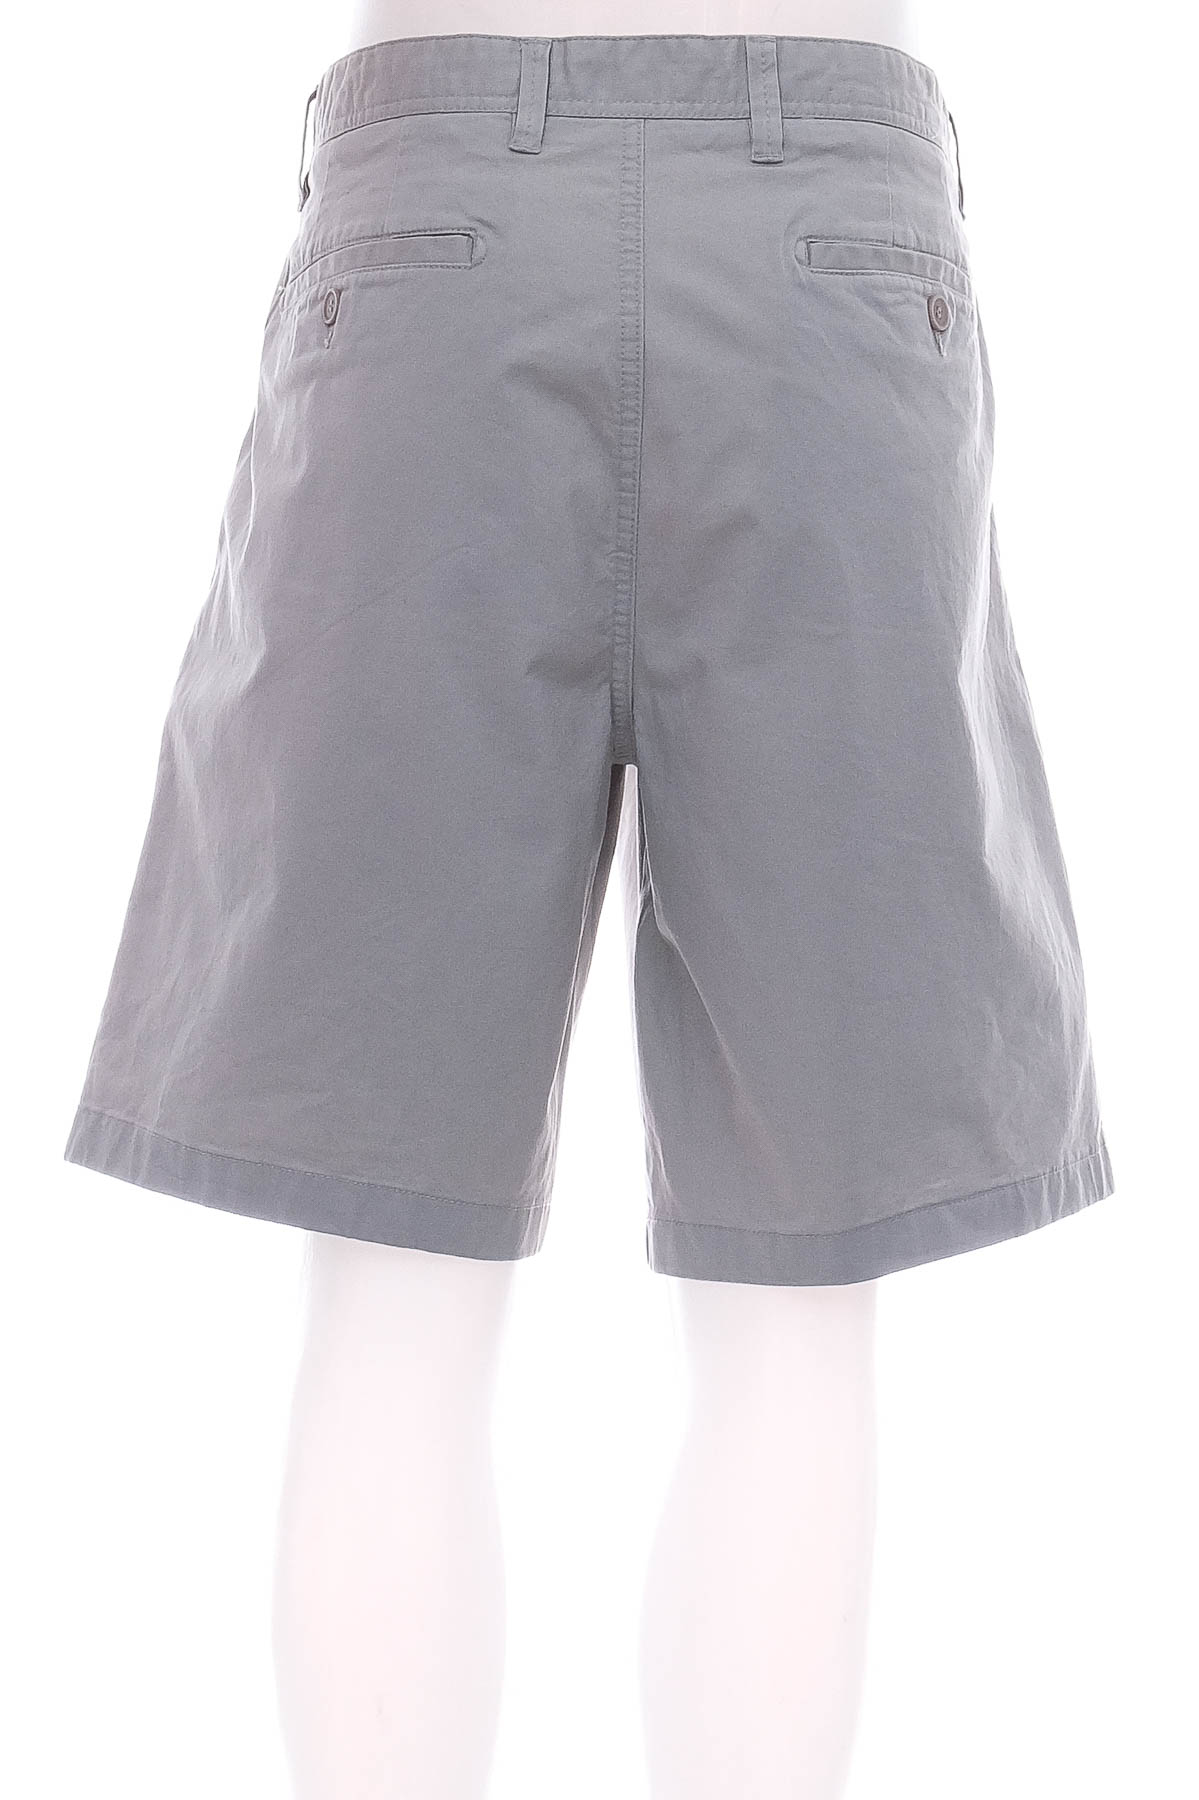 Men's shorts - TRENERY - 1